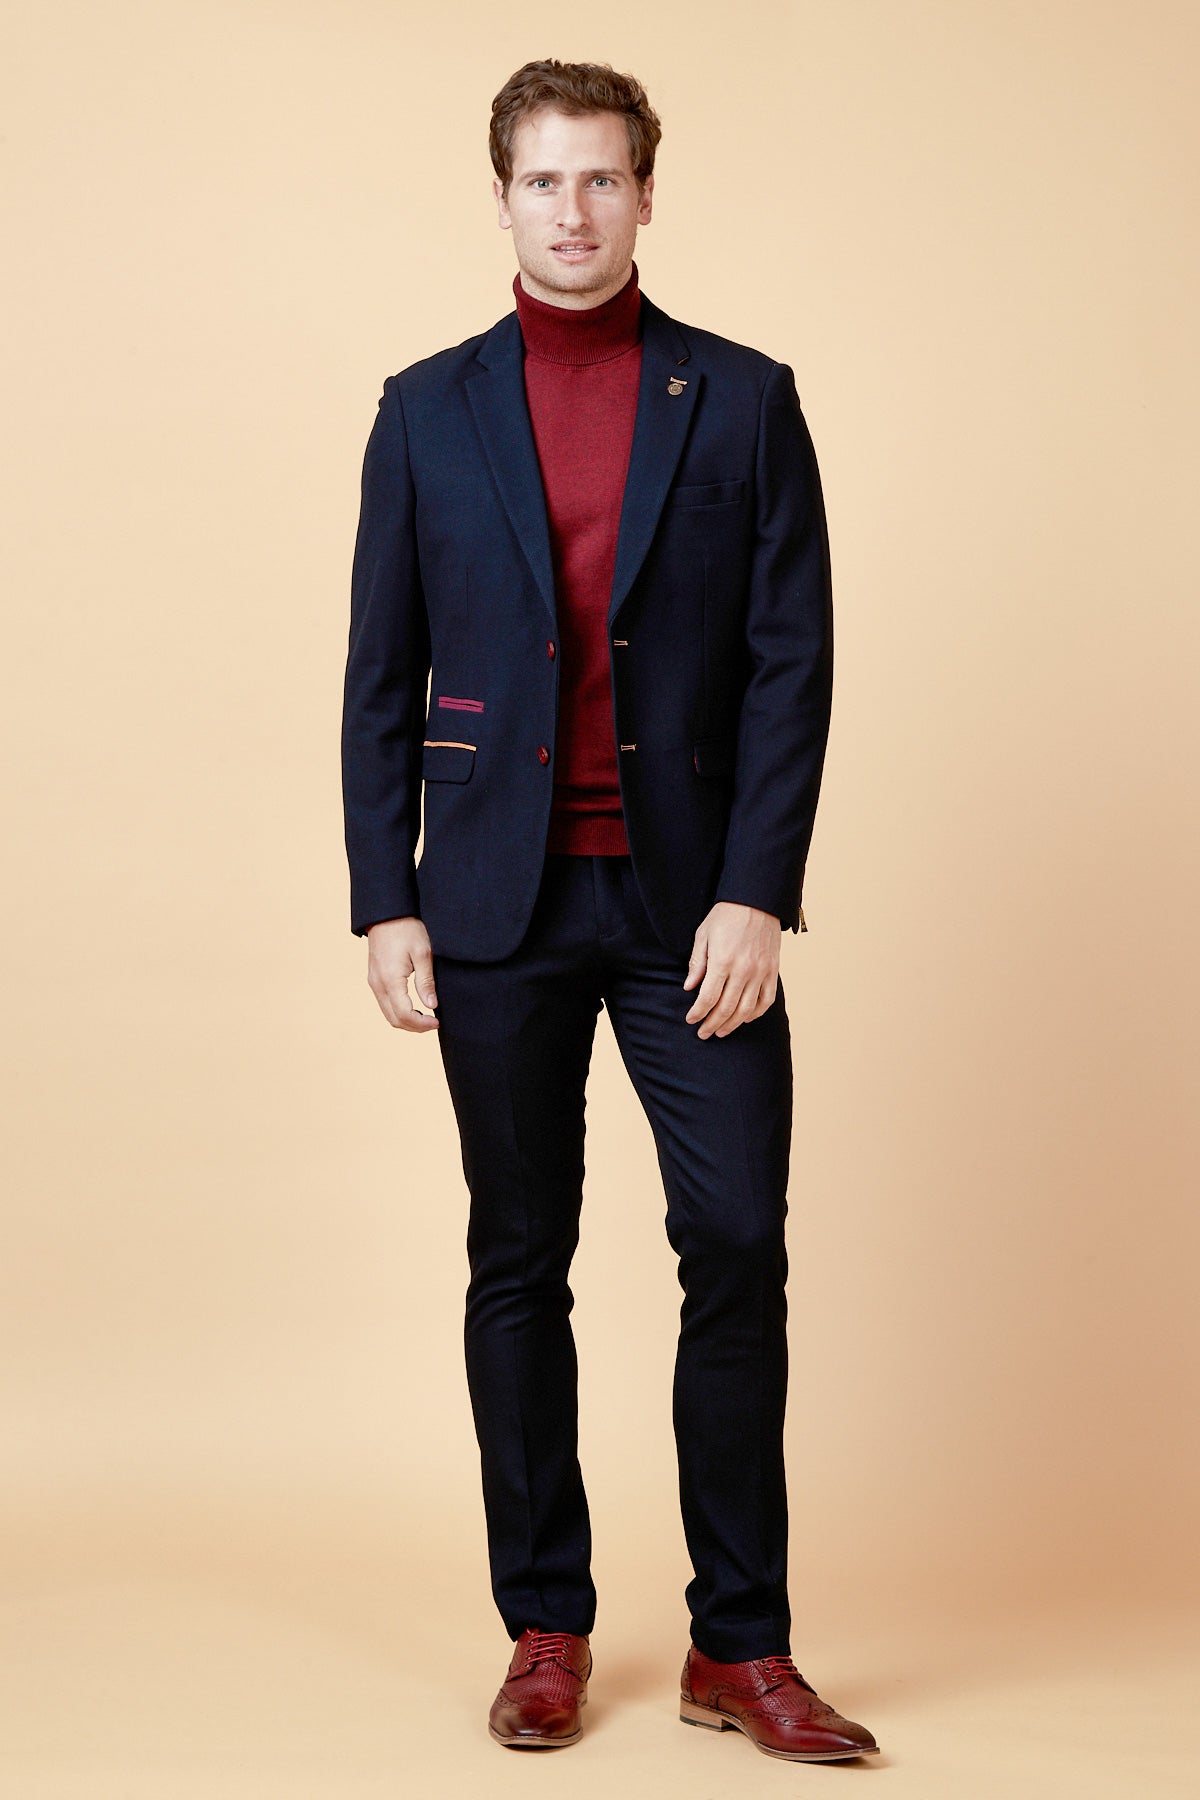 Blue Coats and Blazers - Indian Wear for Men - Buy Latest Designer Men wear  Clothing Online - Utsav Fashion